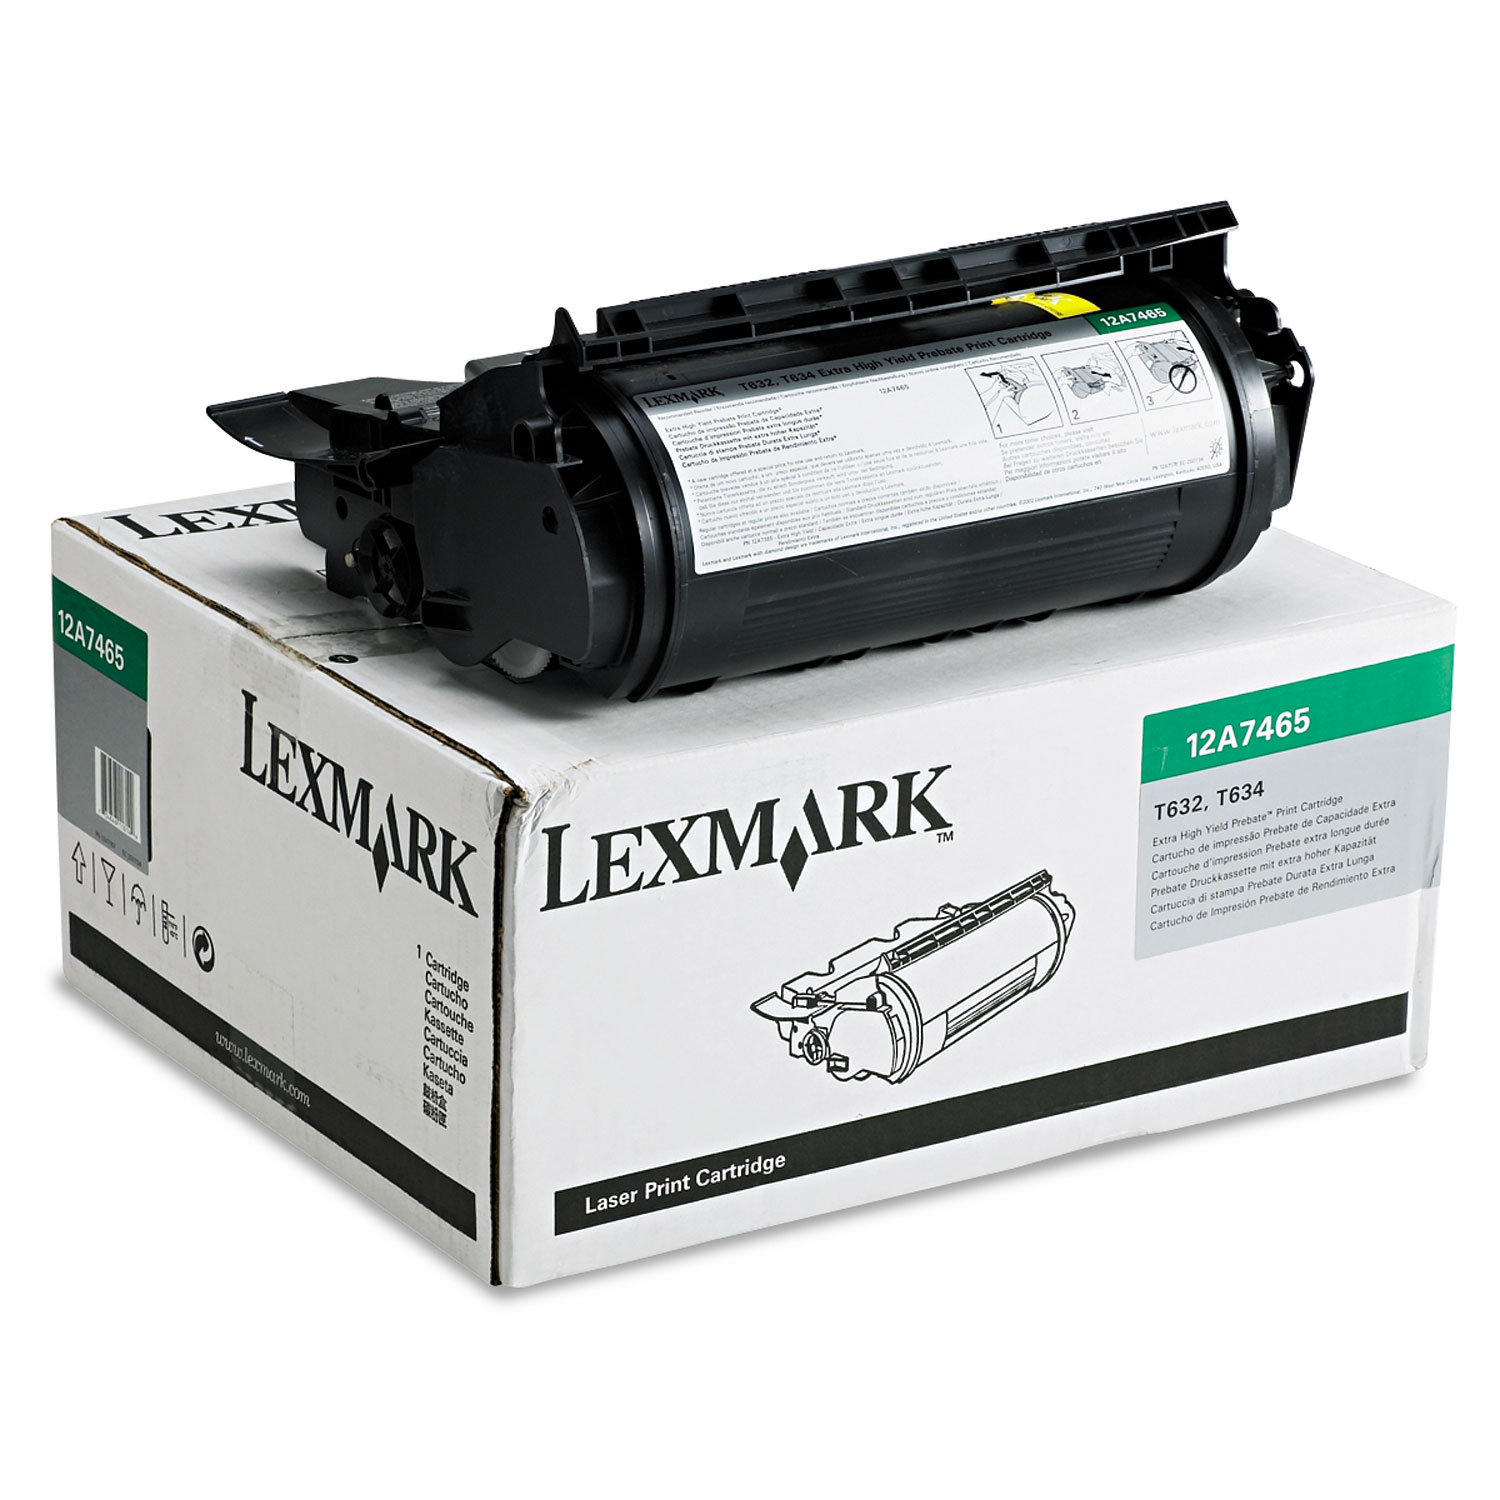  Lexmark 12A7465 12A7465 Return Program Extra High-Yield Toner, 32000 Page-Yield, Black (LEX12A7465) 